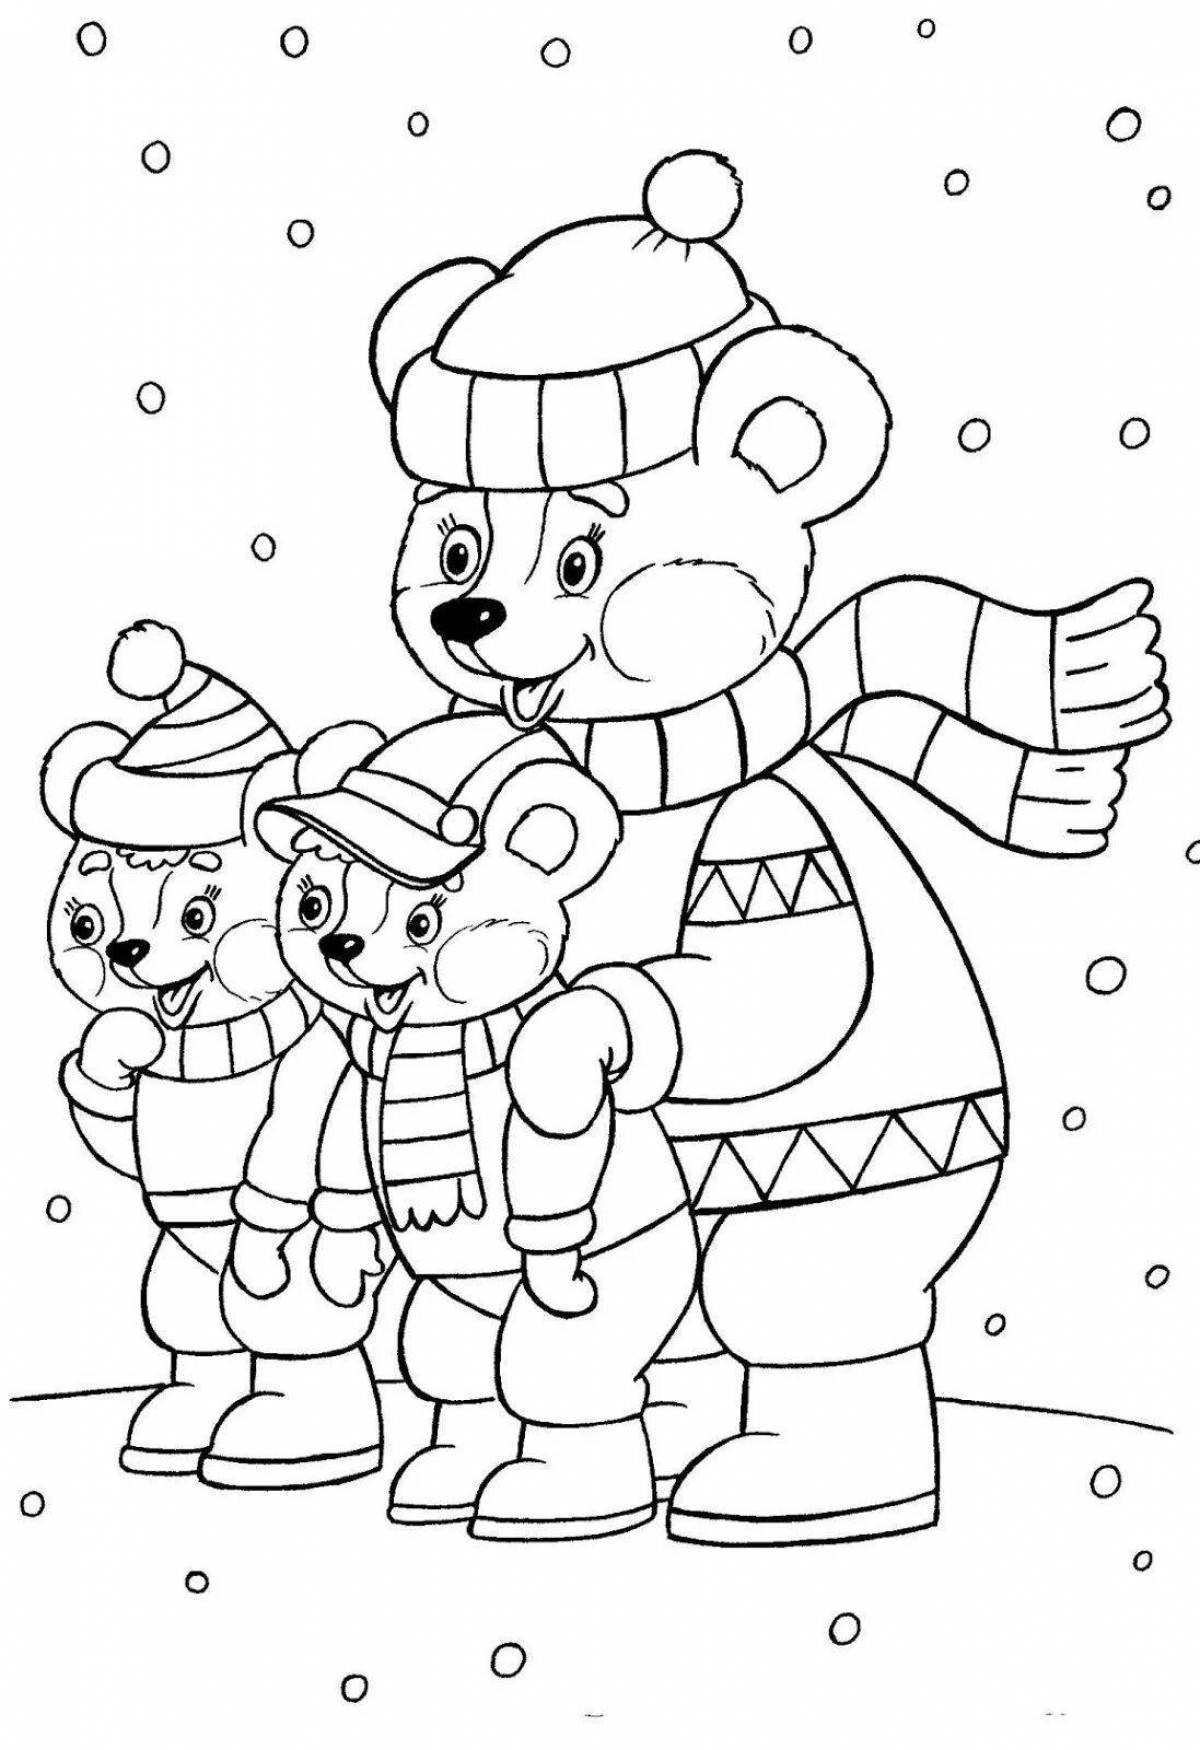 Magic winter Christmas coloring book